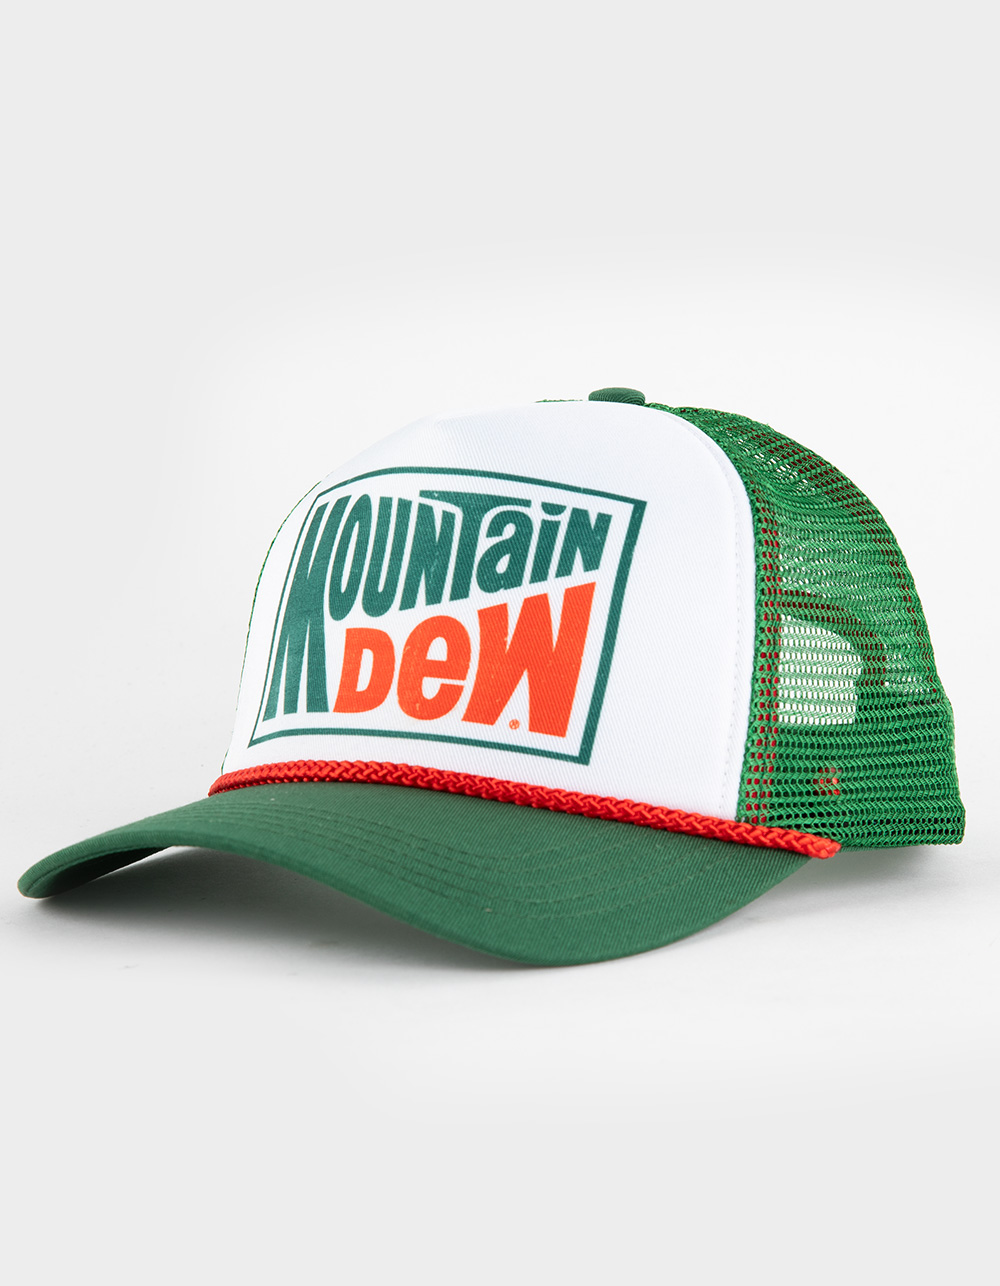 MOUNTAIN DEW Mens Trucker Hat - GREEN COMBO